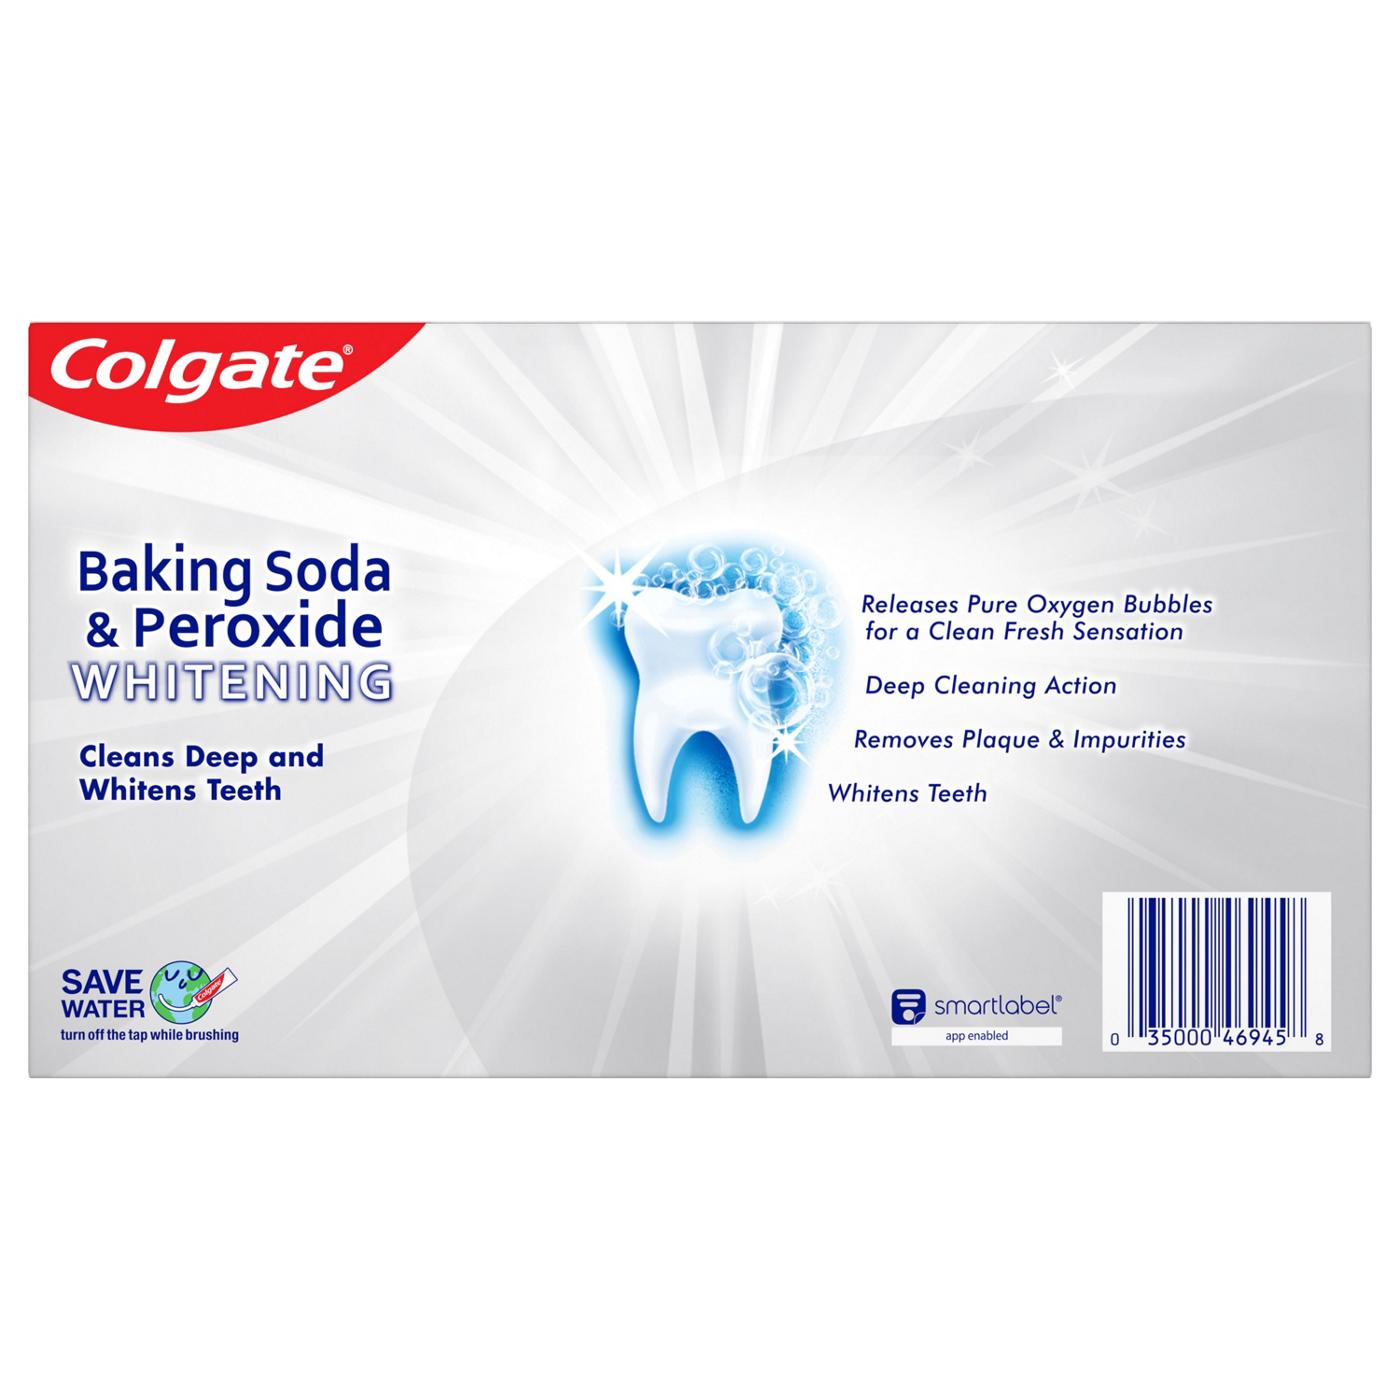 Colgate Baking Soda & Peroxide Anticavity Toothpaste 3 pk - Brisk Mint; image 3 of 3